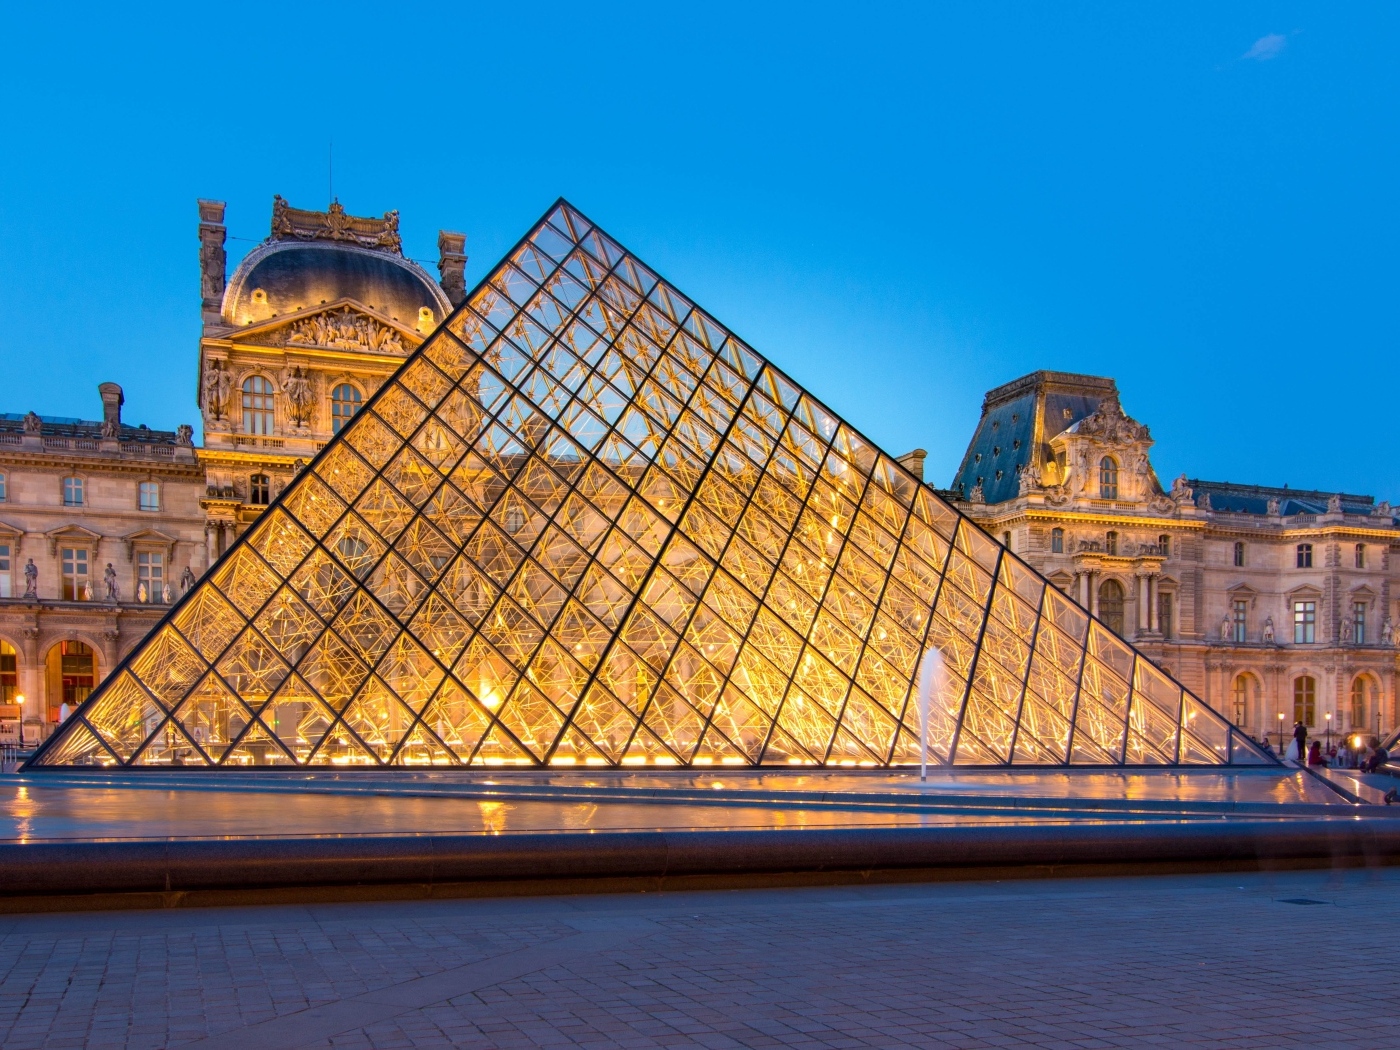 Красивая пирамида инсталляция у музея Лувр, Франция